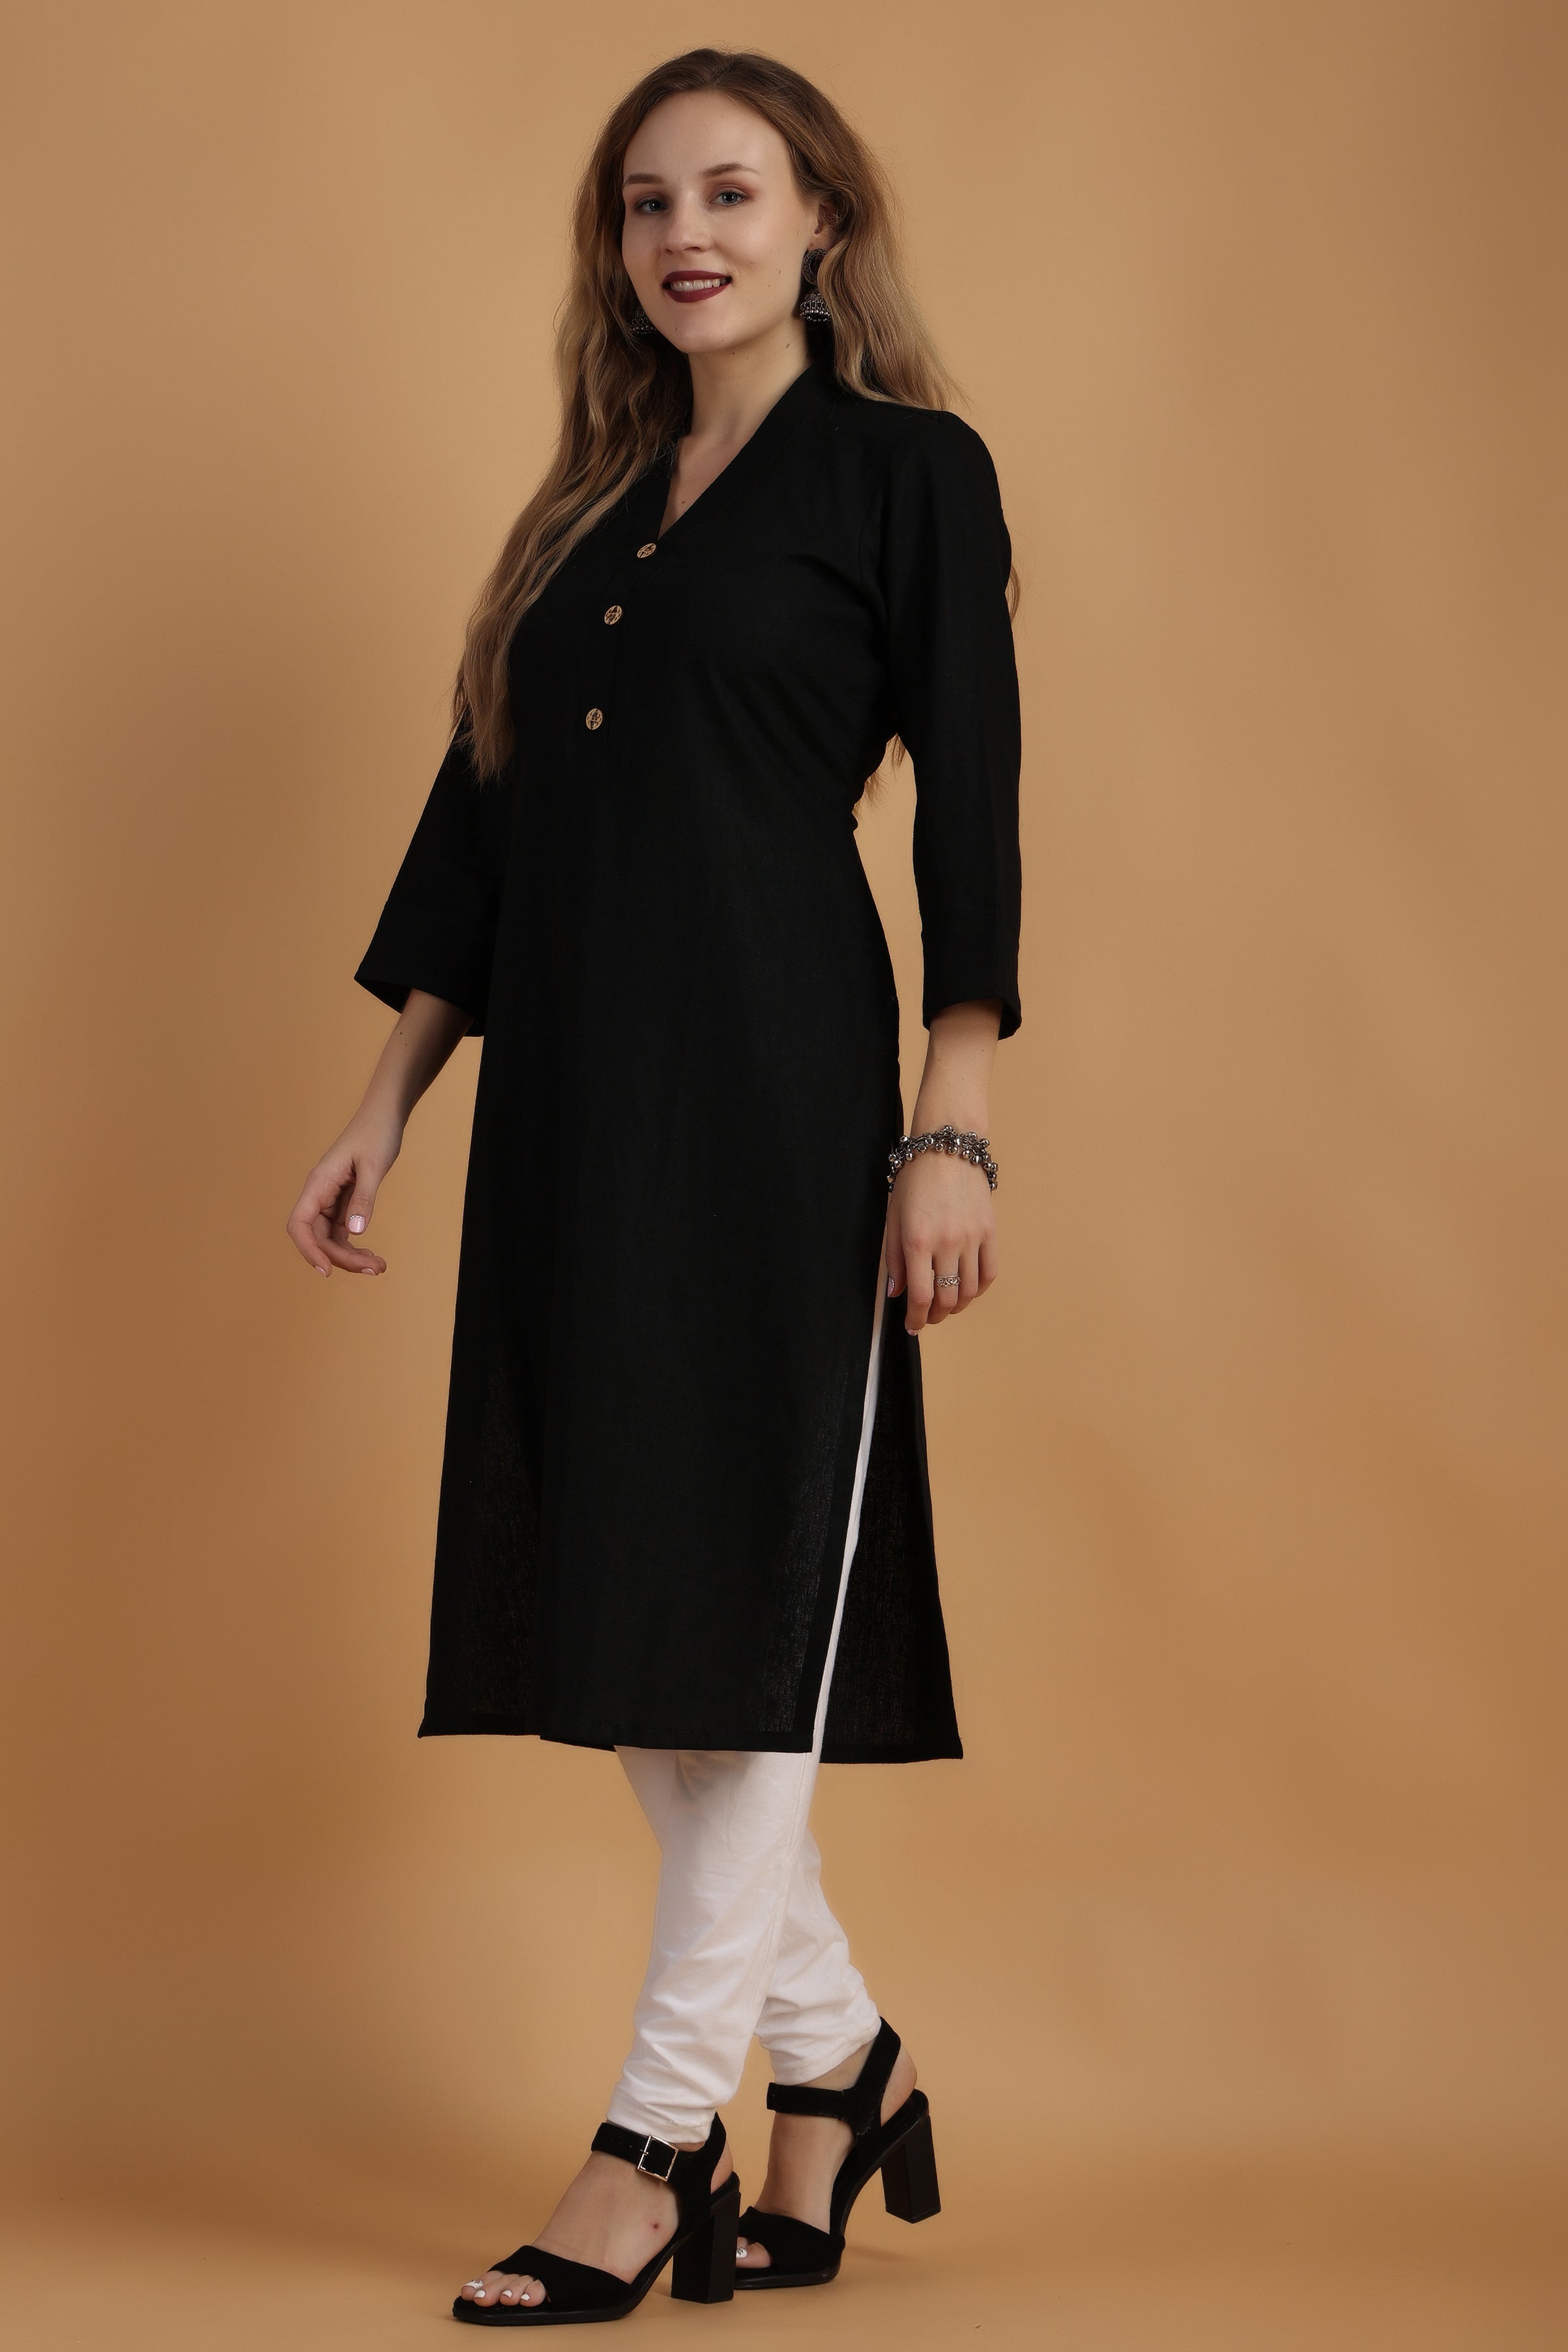 VISVA DESIGNER Cotton Plain Black Parinted Lace Border Anarkali Dress Kurtis  for Women - Not a Set with Dupatta or Pant : Amazon.in: Fashion